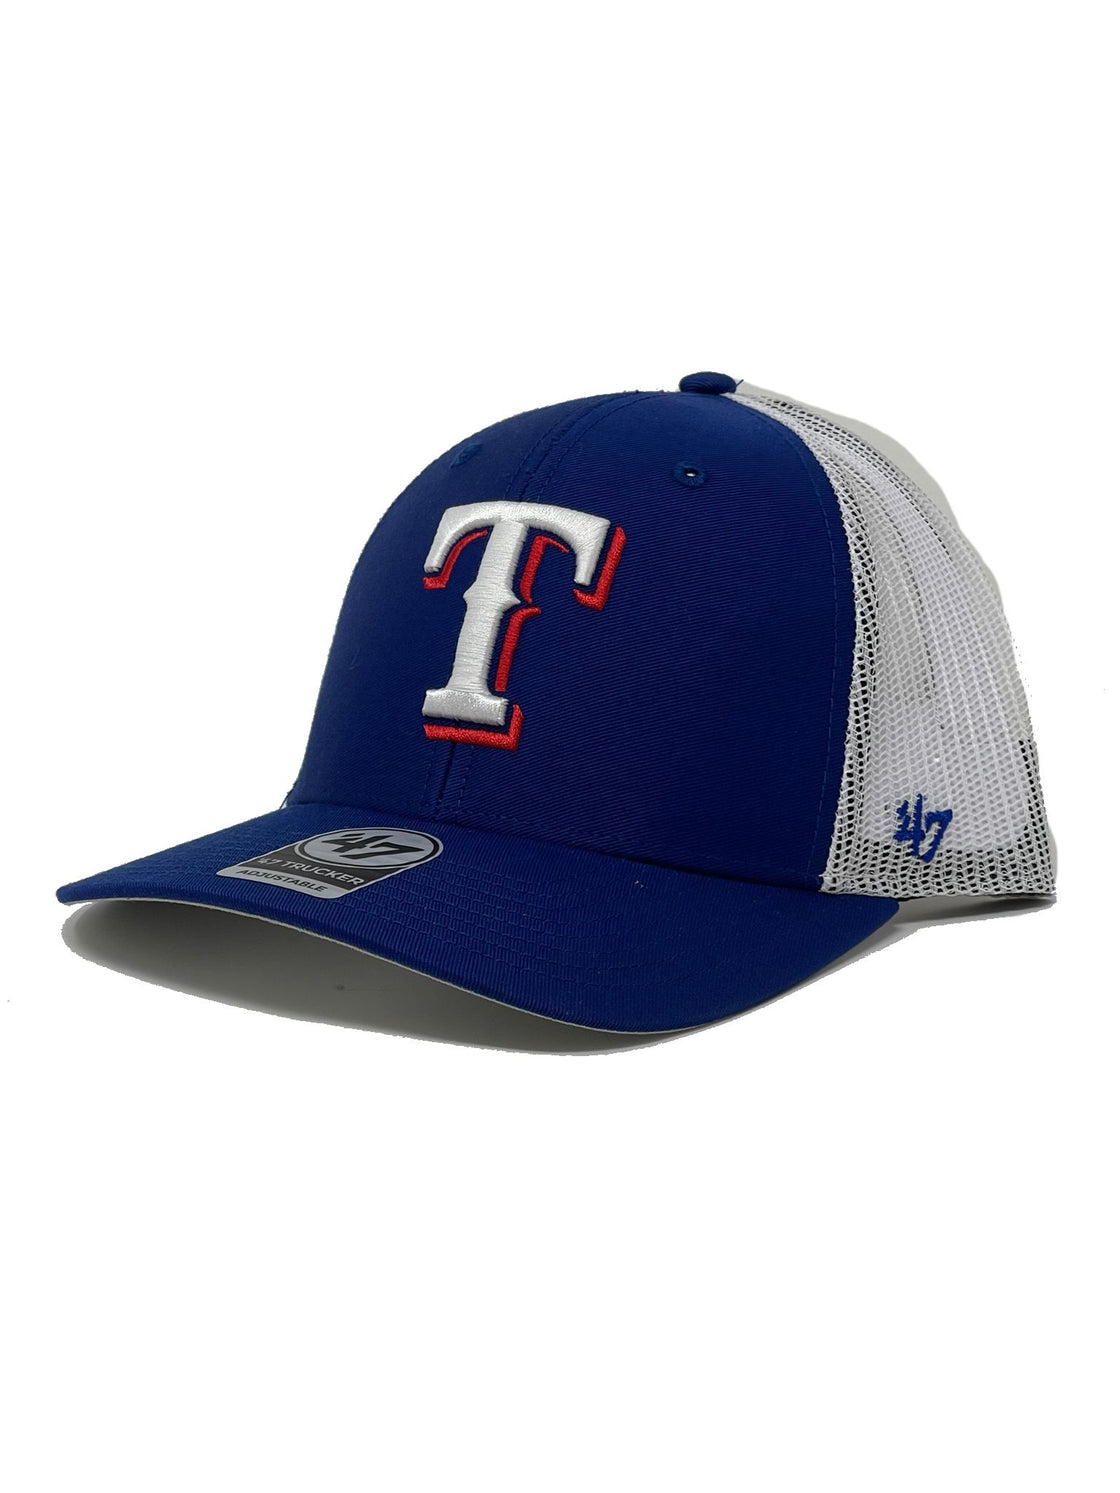 TEXAS RANGERS 47 MLB TRUCKER HAT